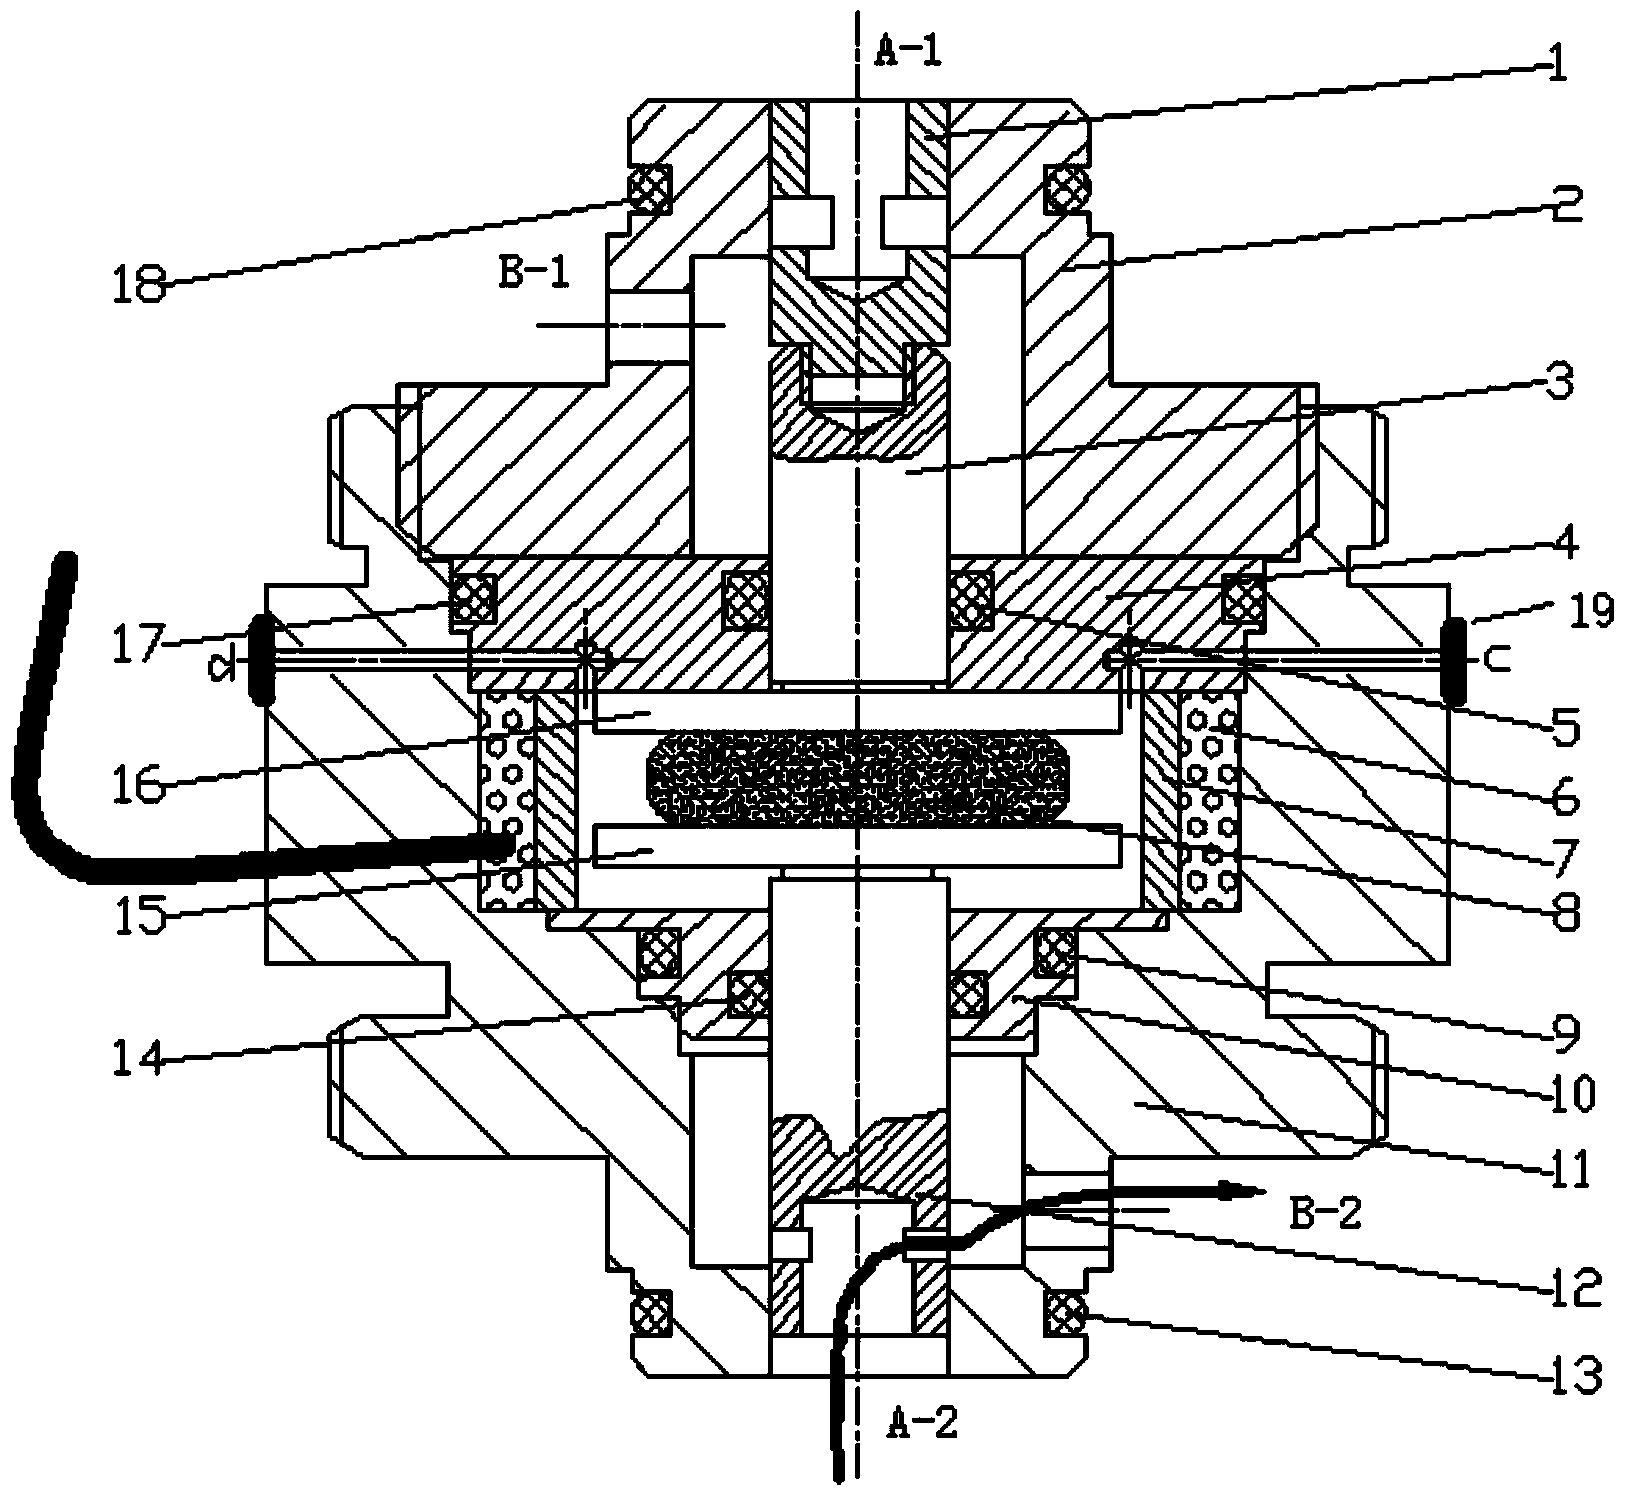 Two-way flow control valve